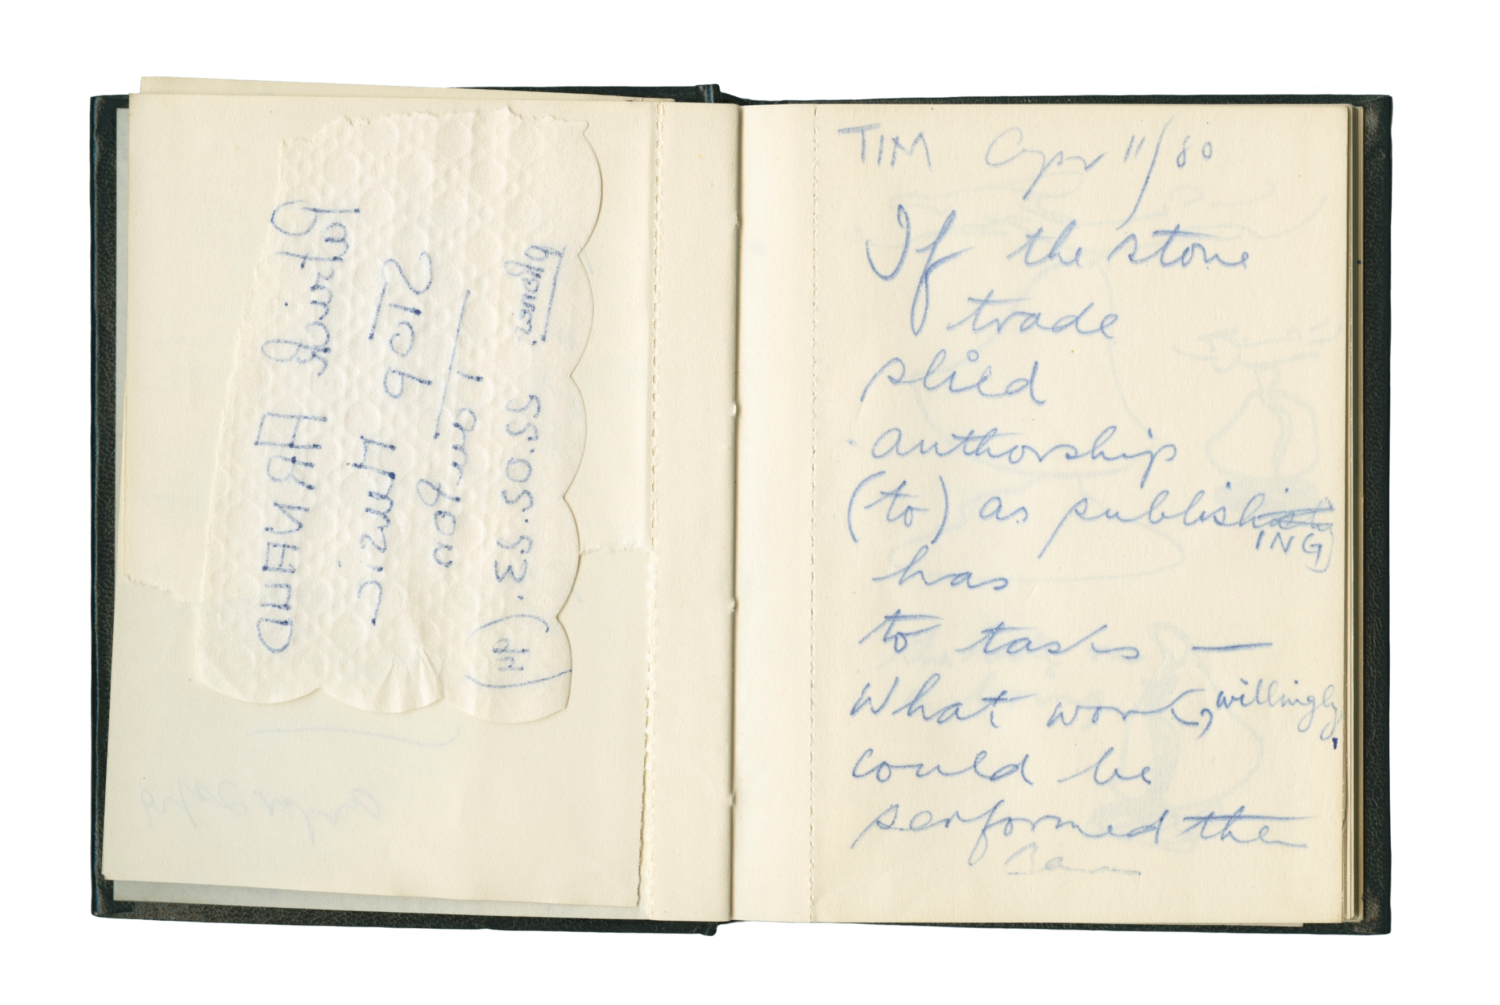 Sketch and notebook (April 1979 – April 1980) [Apr 80]